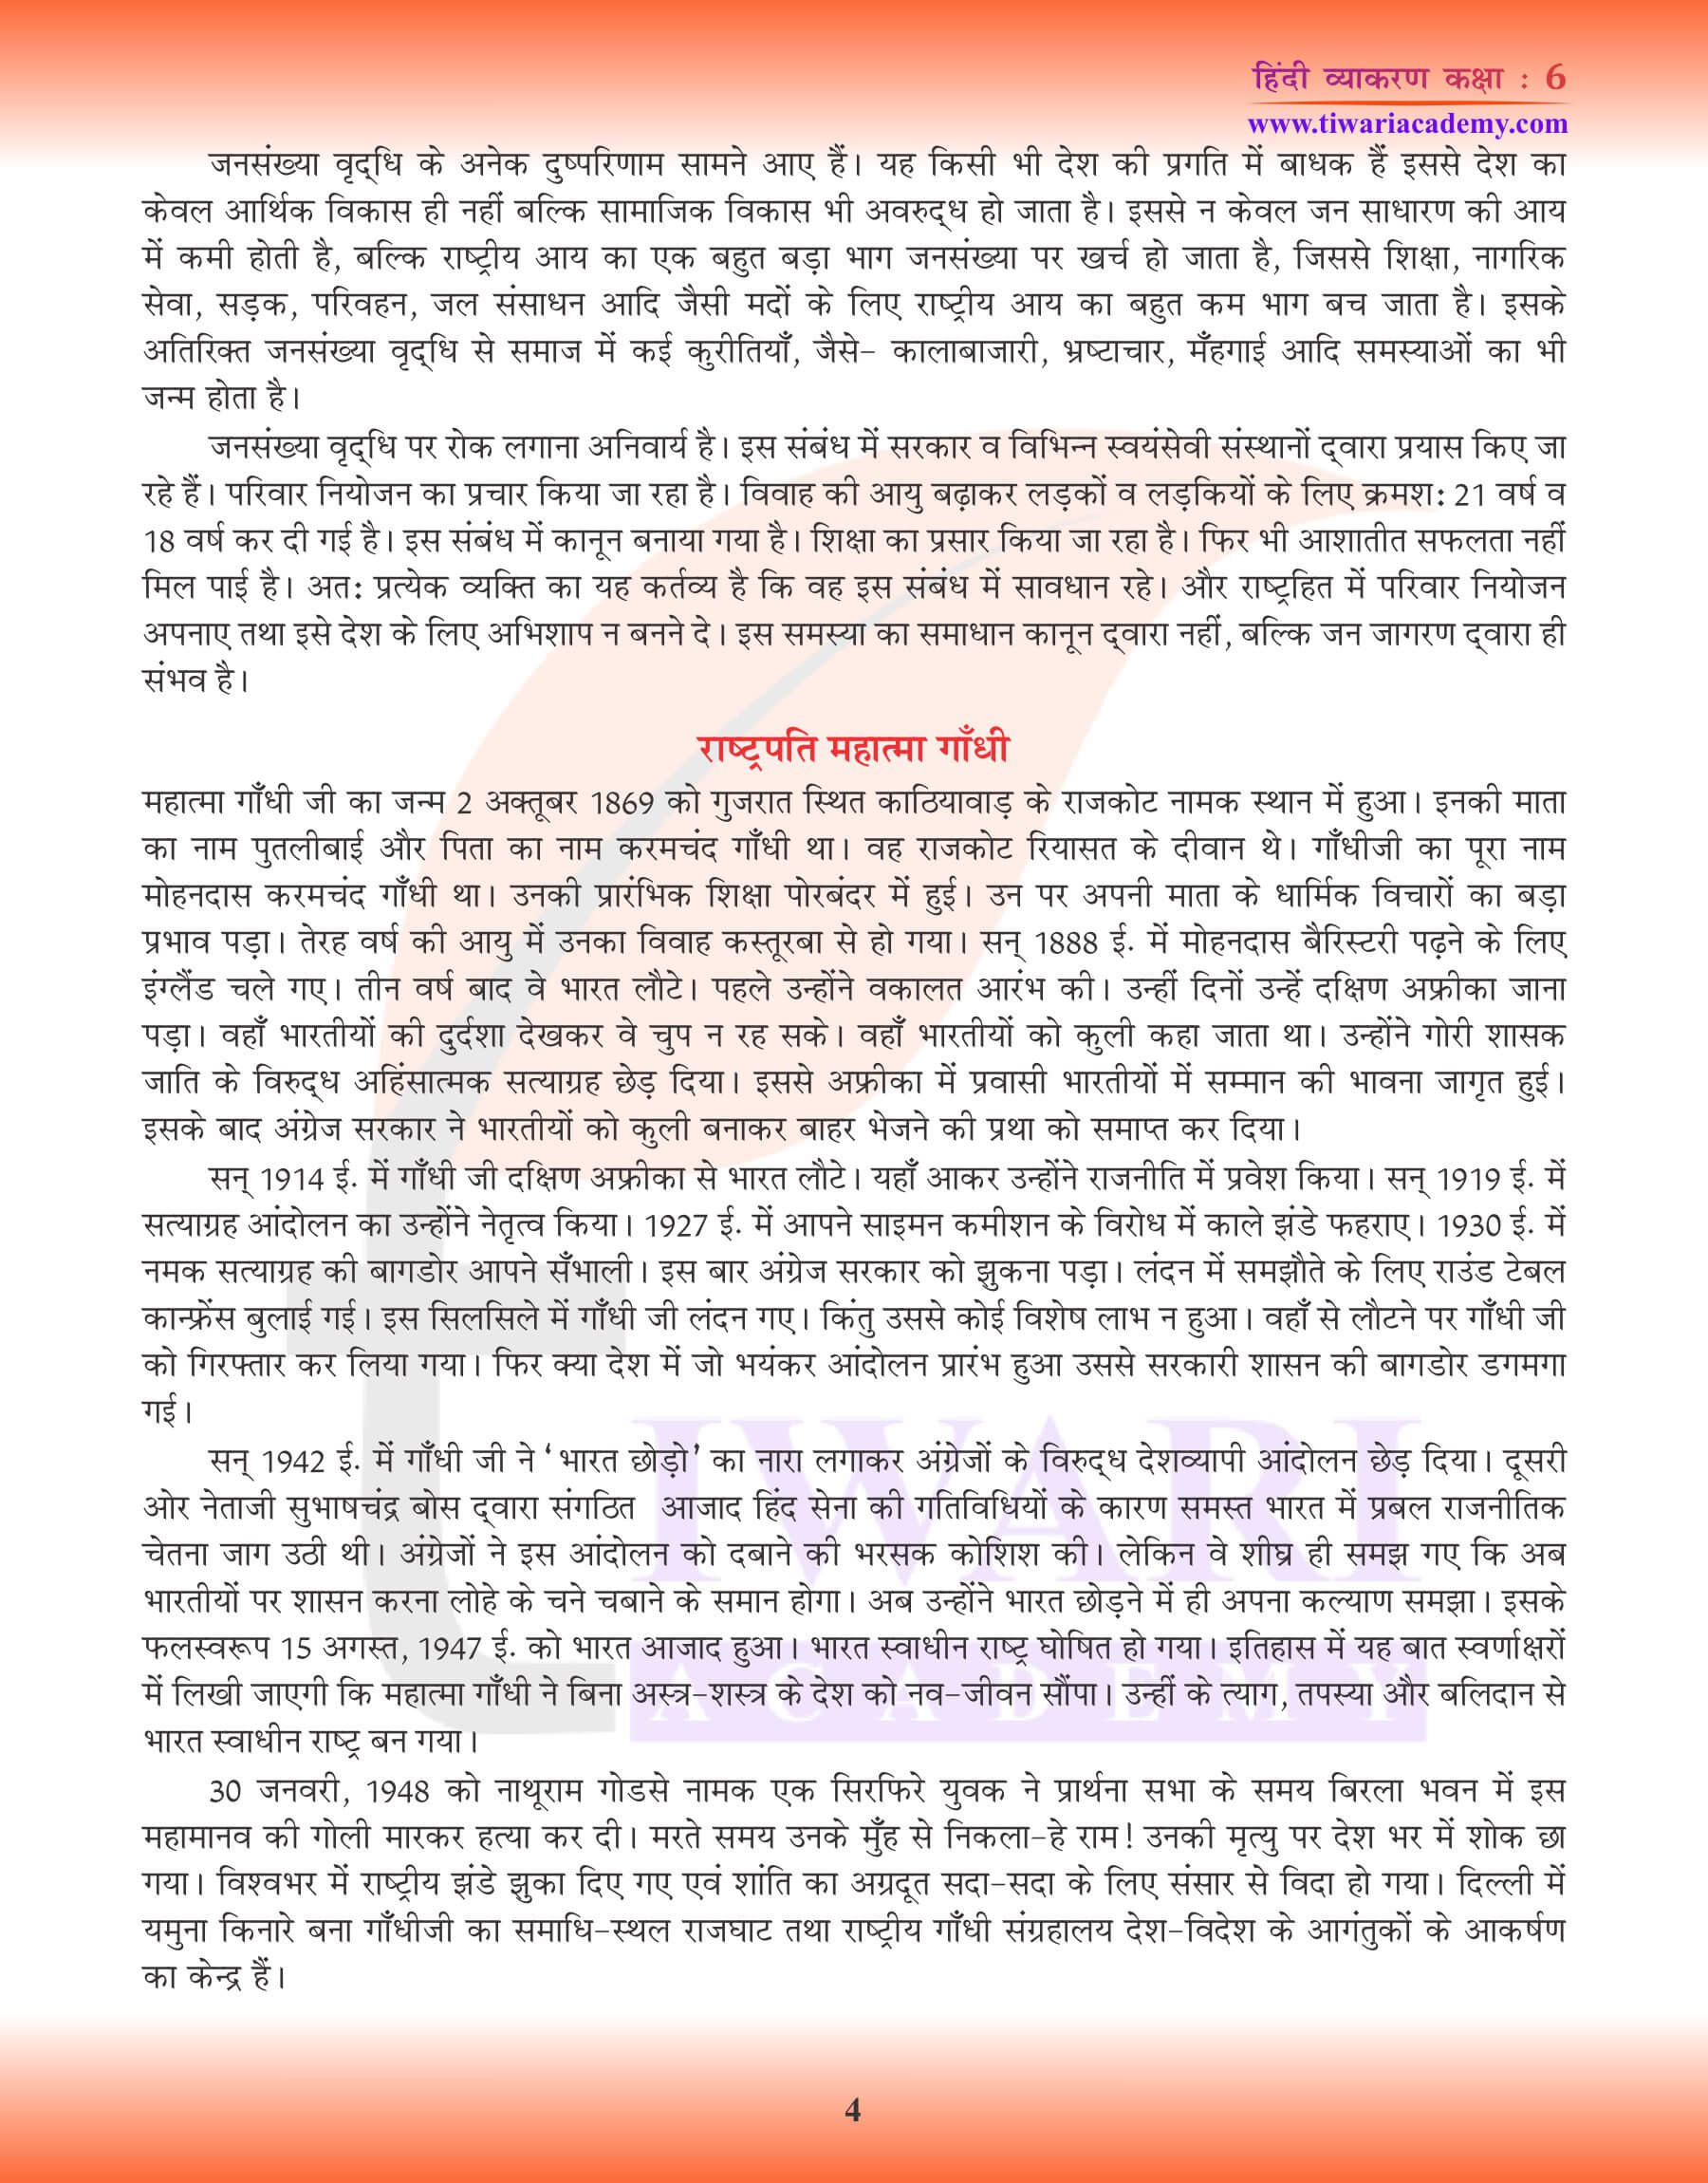 कक्षा 6 हिंदी व्याकरण निबंध लिखना